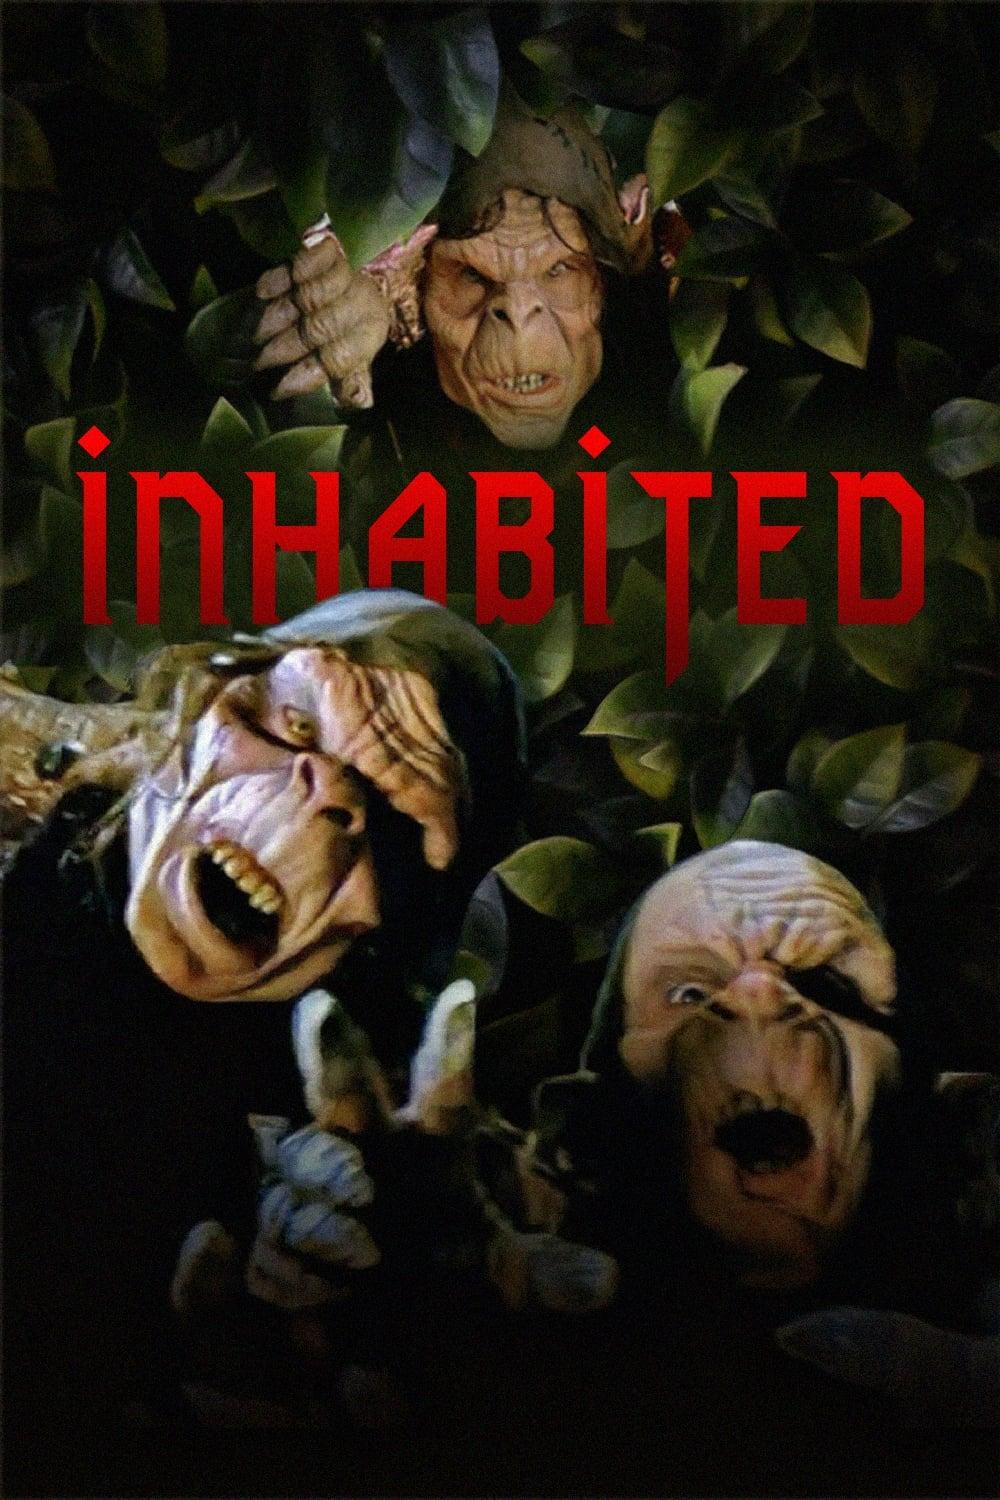 Inhabited poster